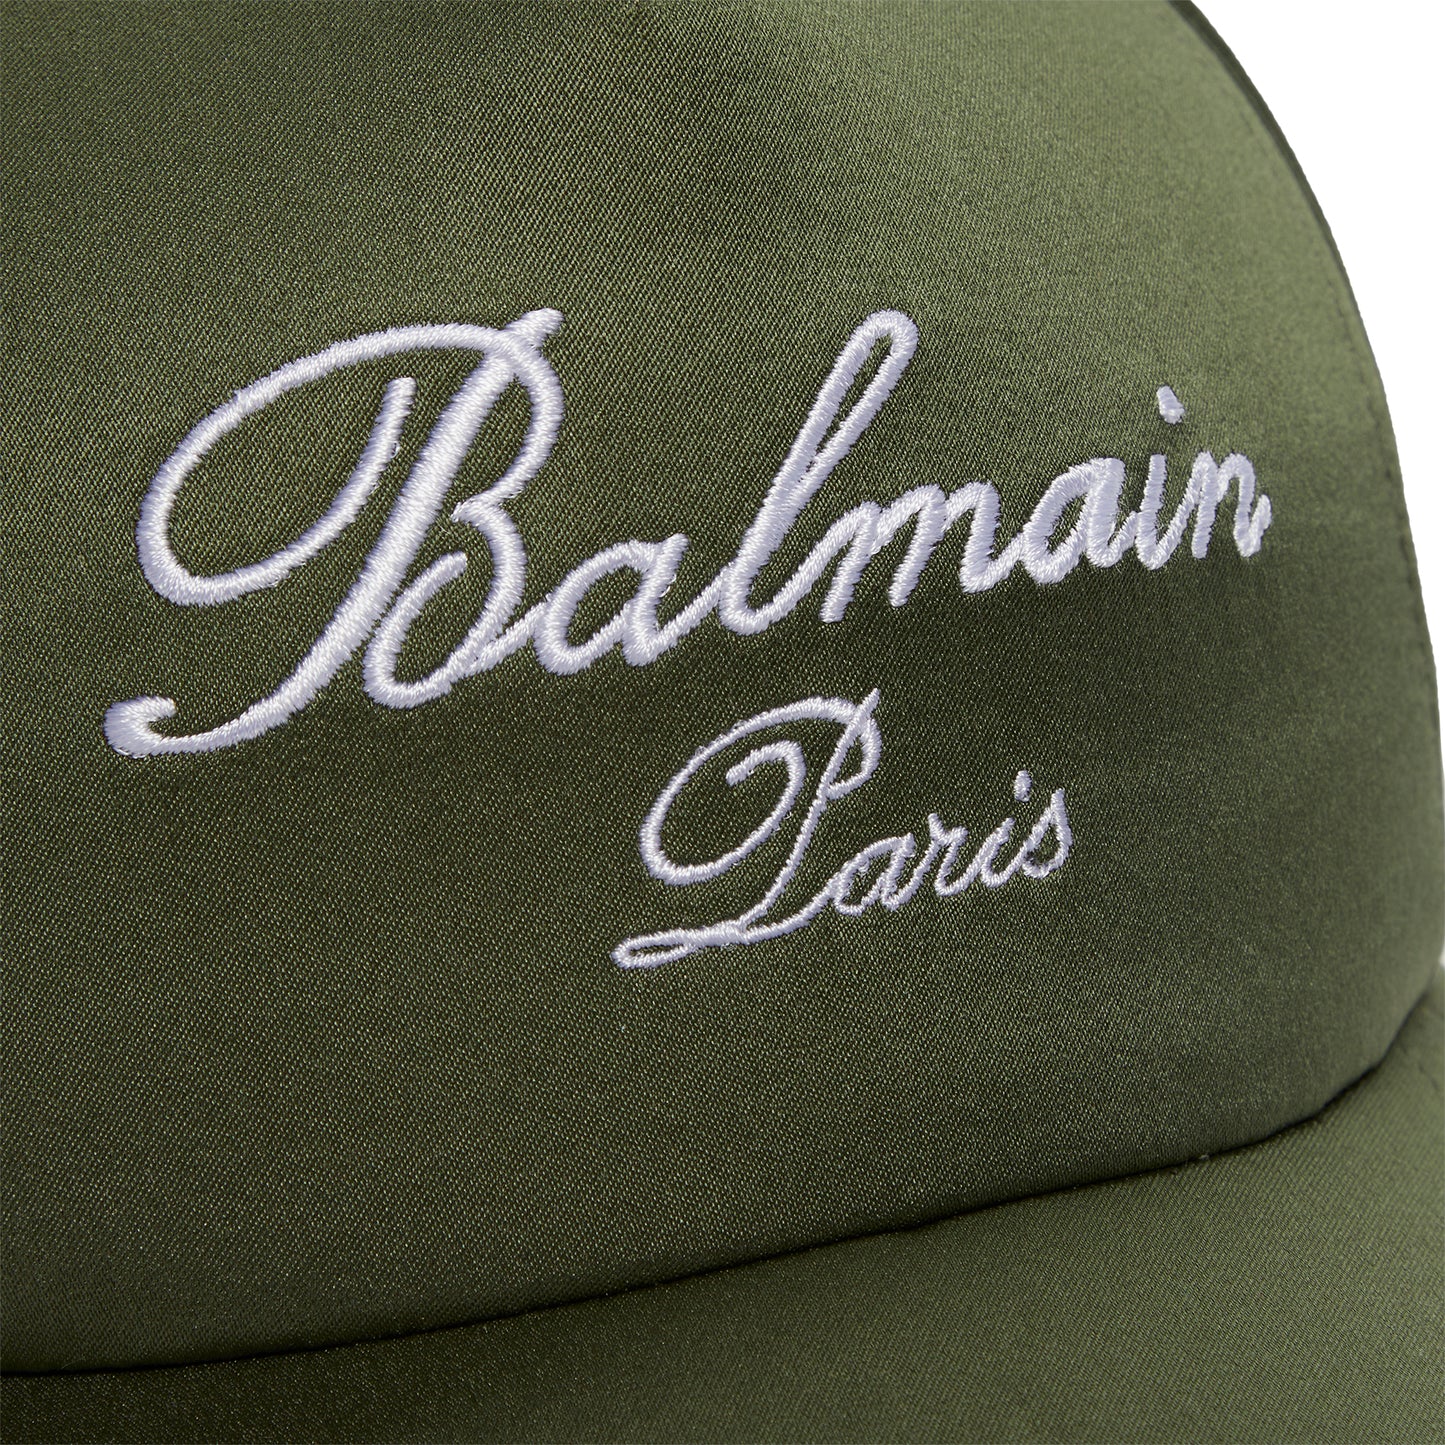 Balmain Signature Embroidery Nylon Cap (Green)